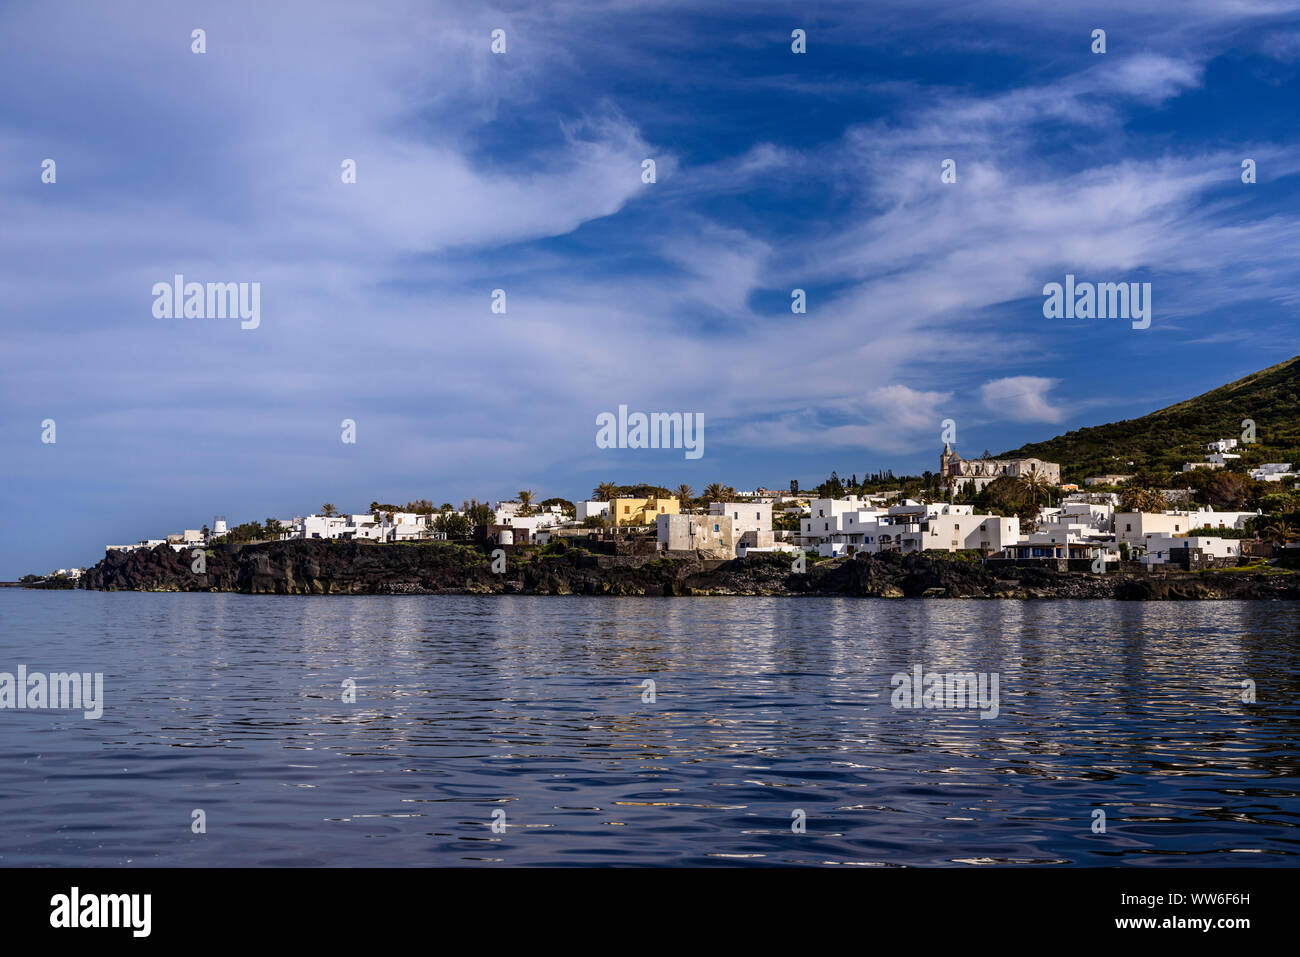 Italy, Sicily, Aeolian Islands, Stromboli, Stromboli village, Piscita district, view from a boat Stock Photo